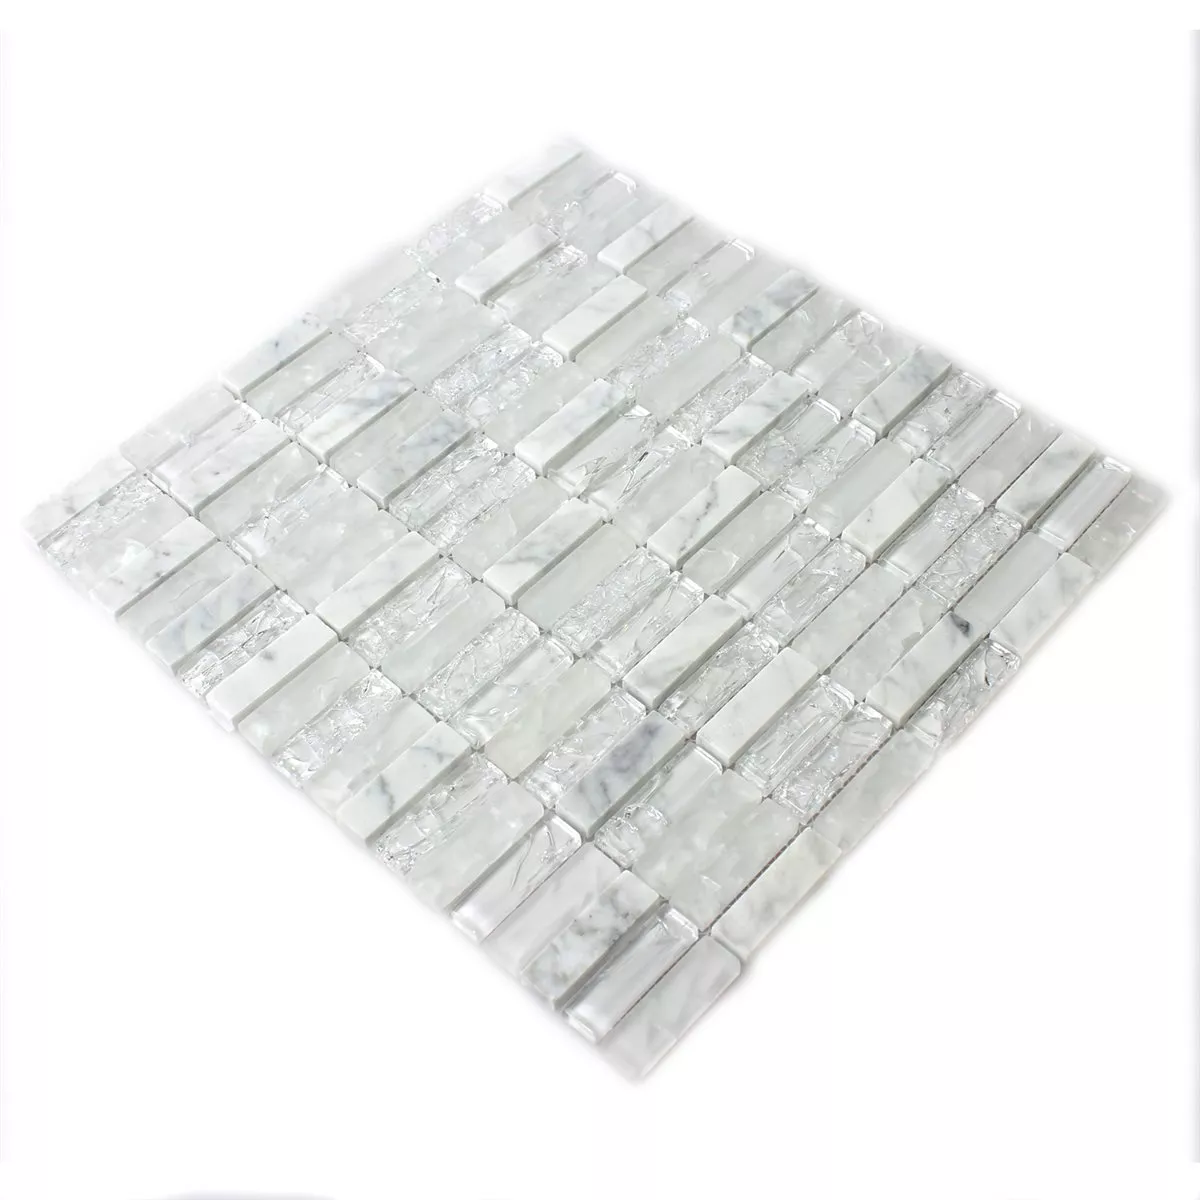 Sample Mosaic Tiles Glass Natural Stone Sticks Broken White